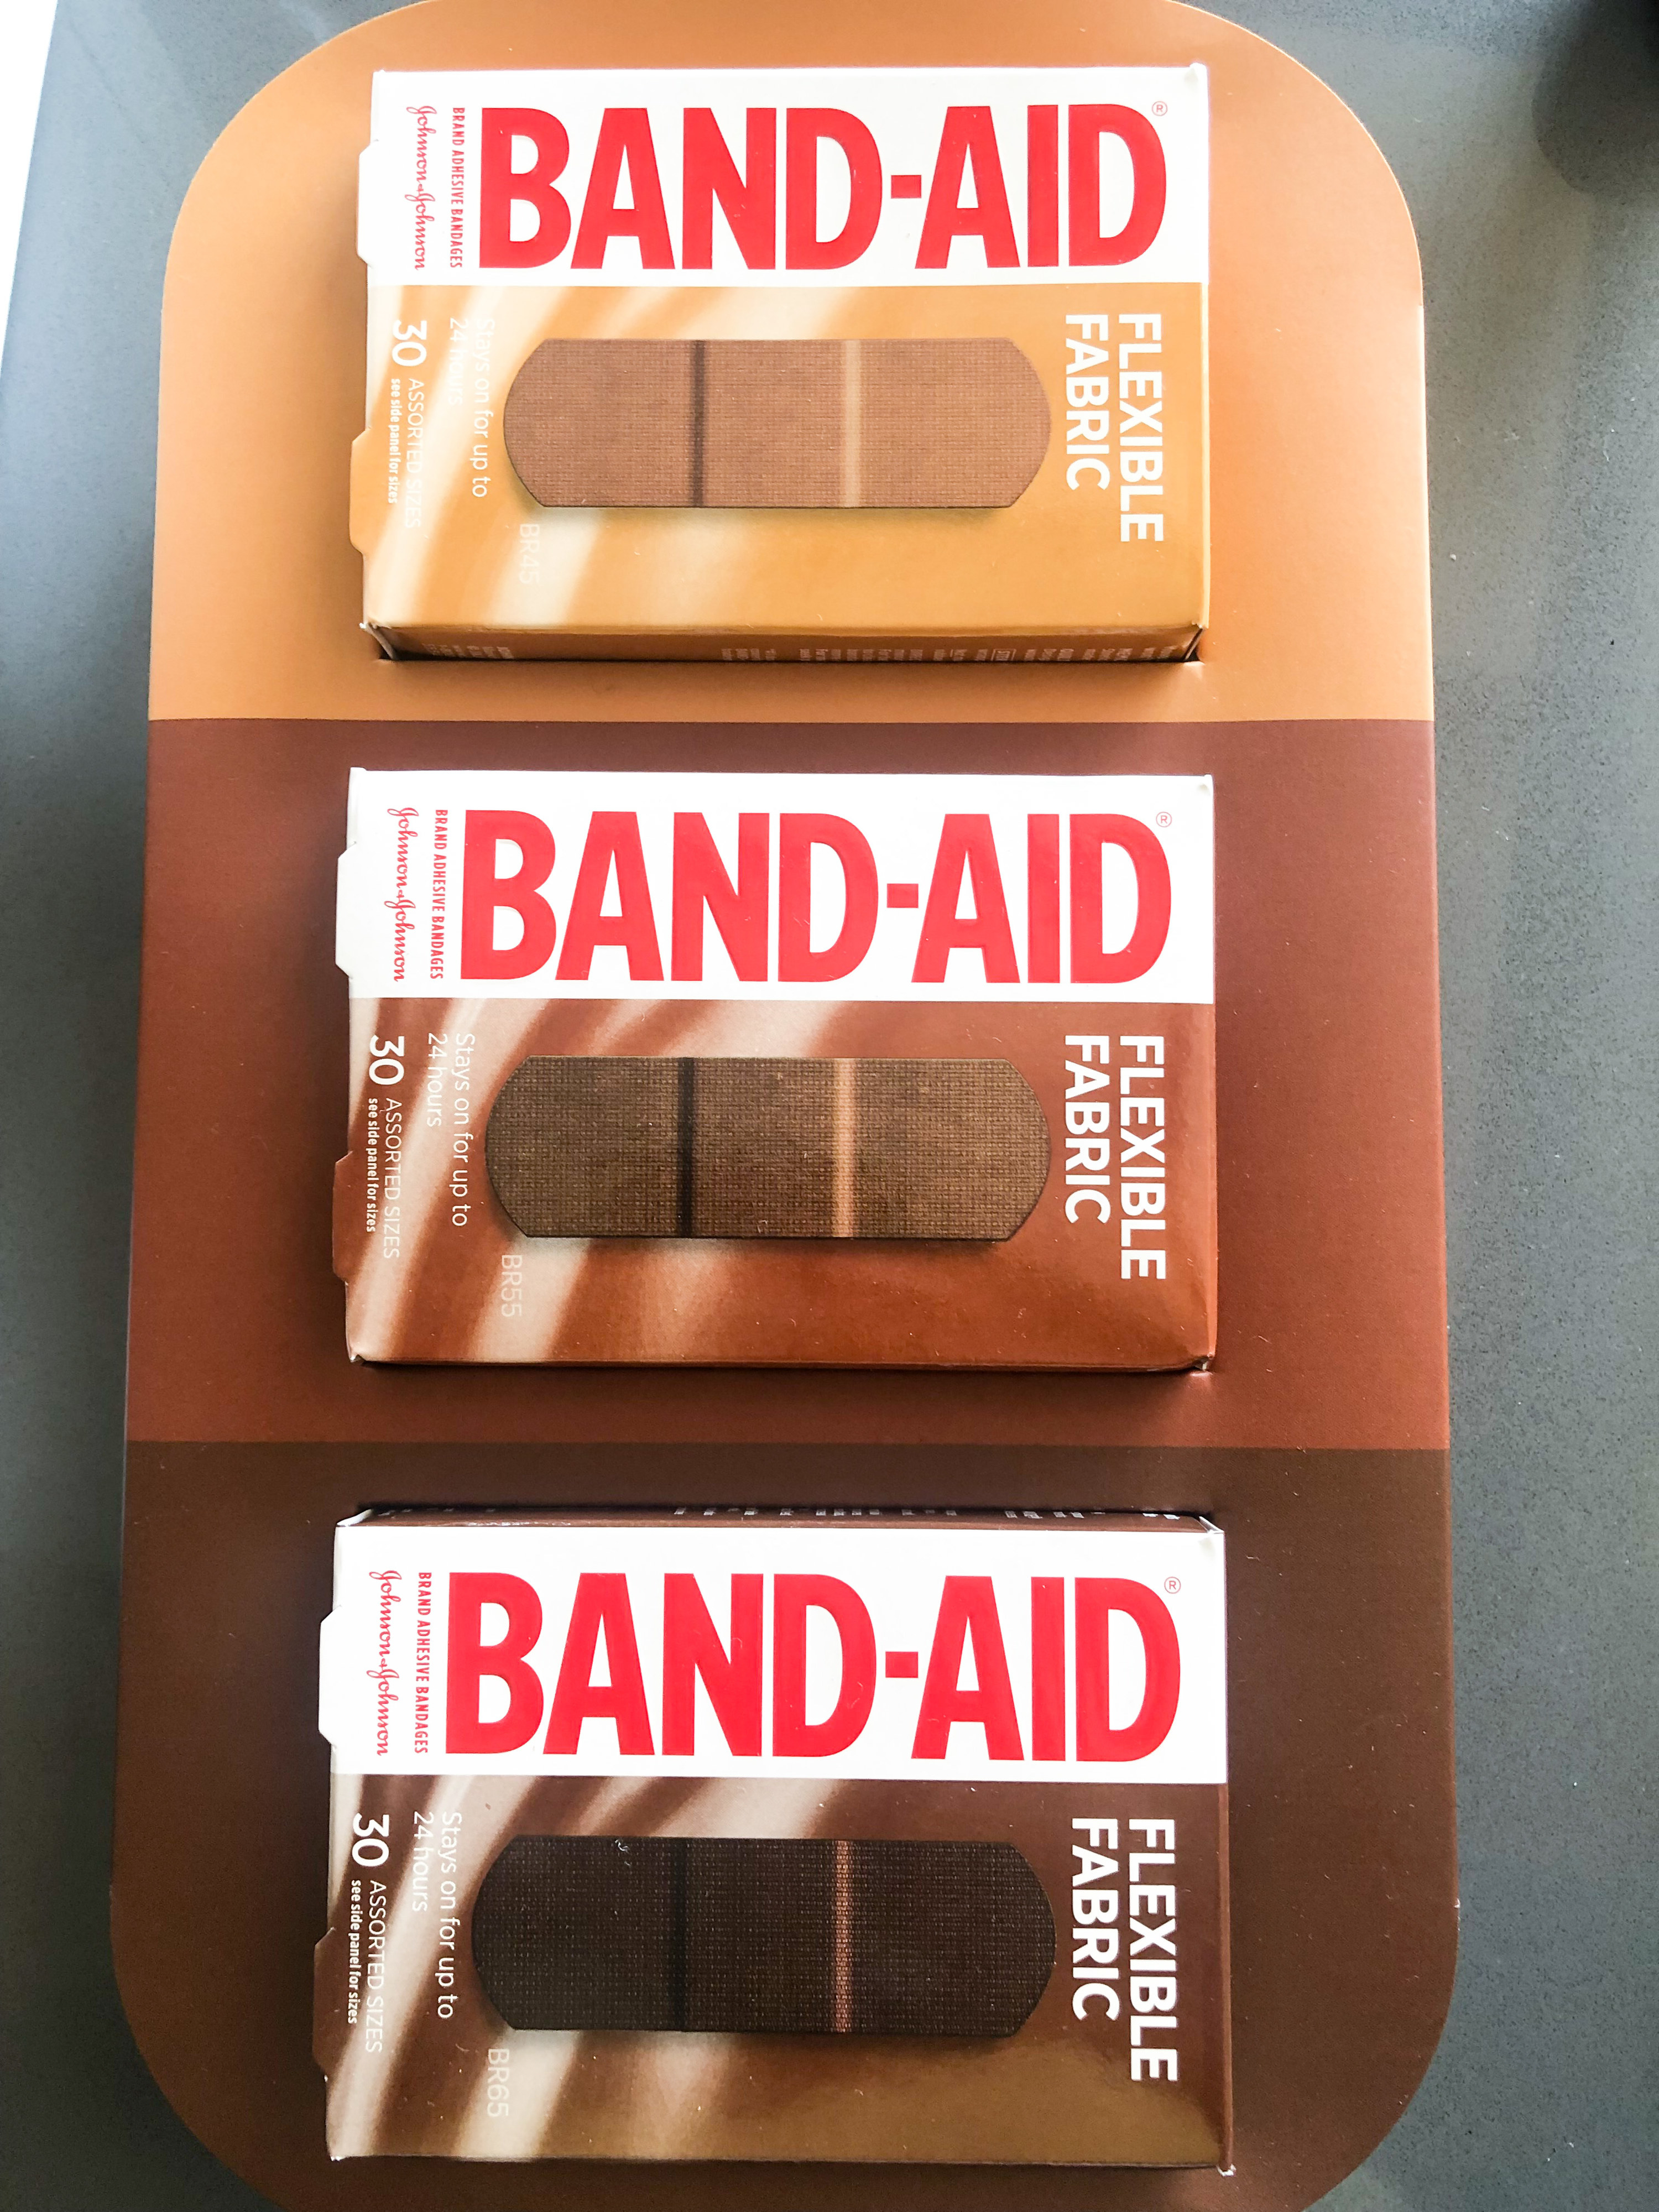 A flatlay of three boxes of bandaids in dark skin tone shades